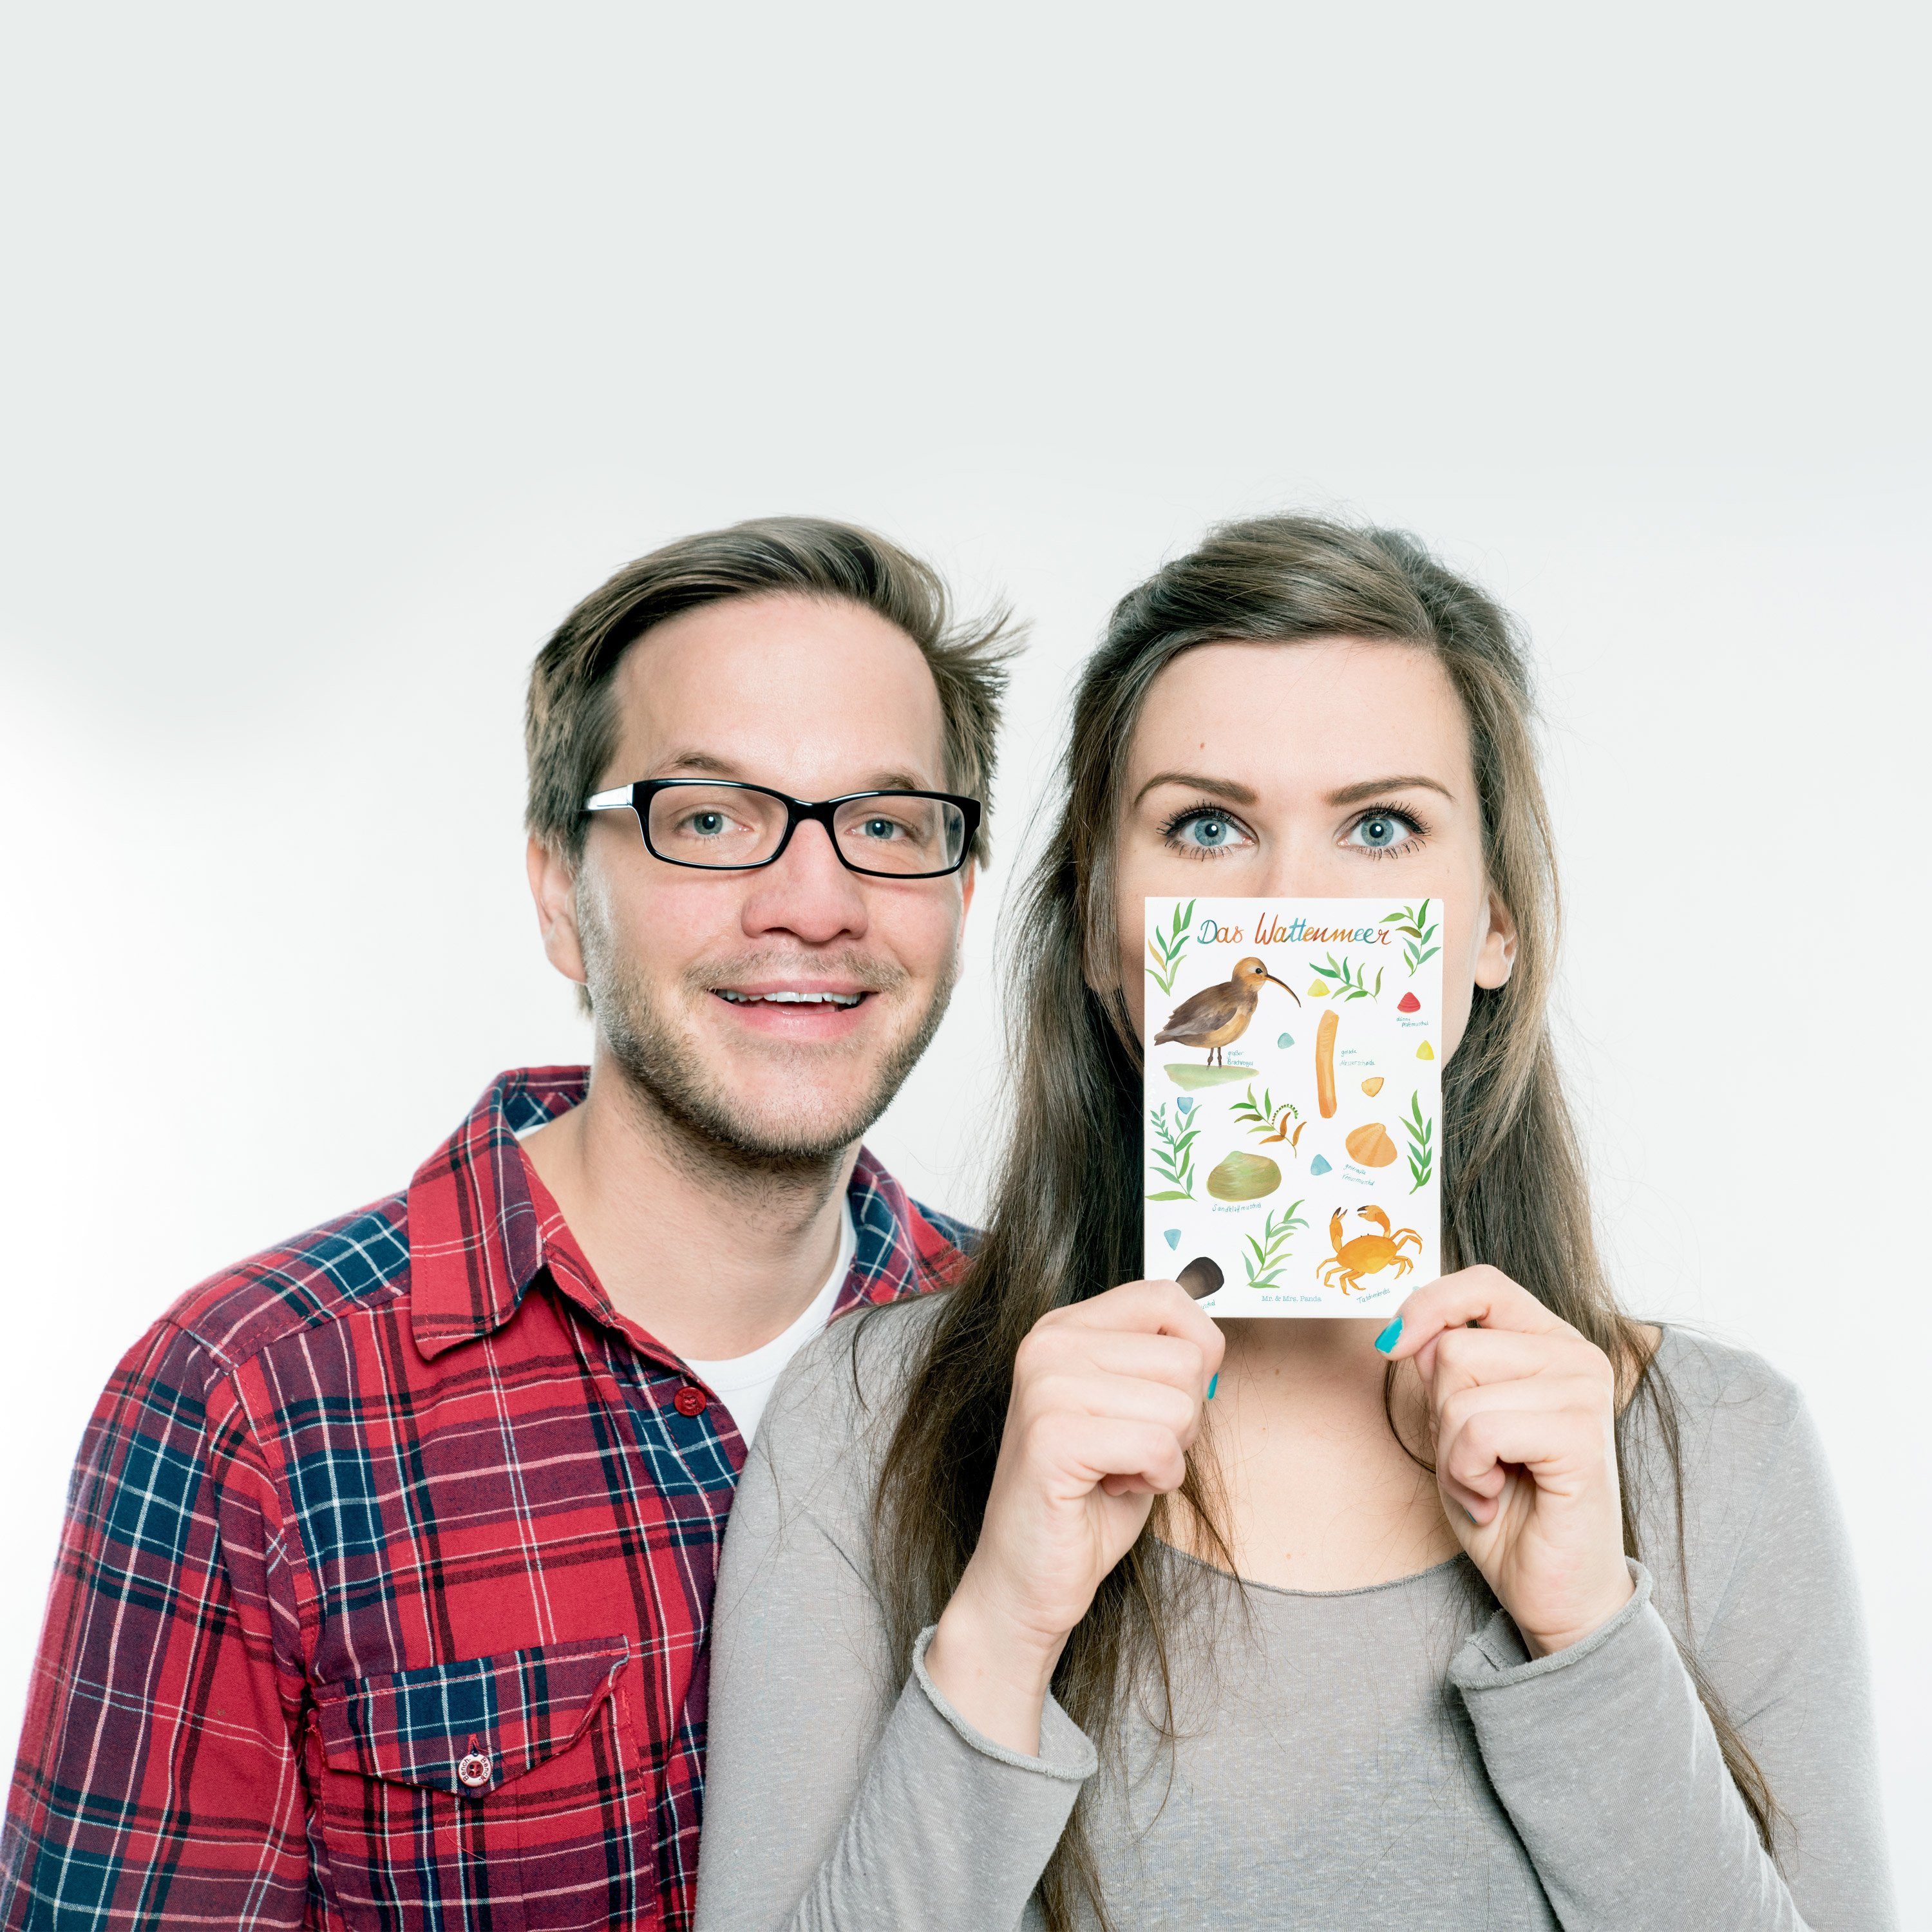 Mr. & Mrs. Panda Wattenmeer Postkarte Einladungskarte, Geschenk Flut, - Natur Geschenk, Maritim